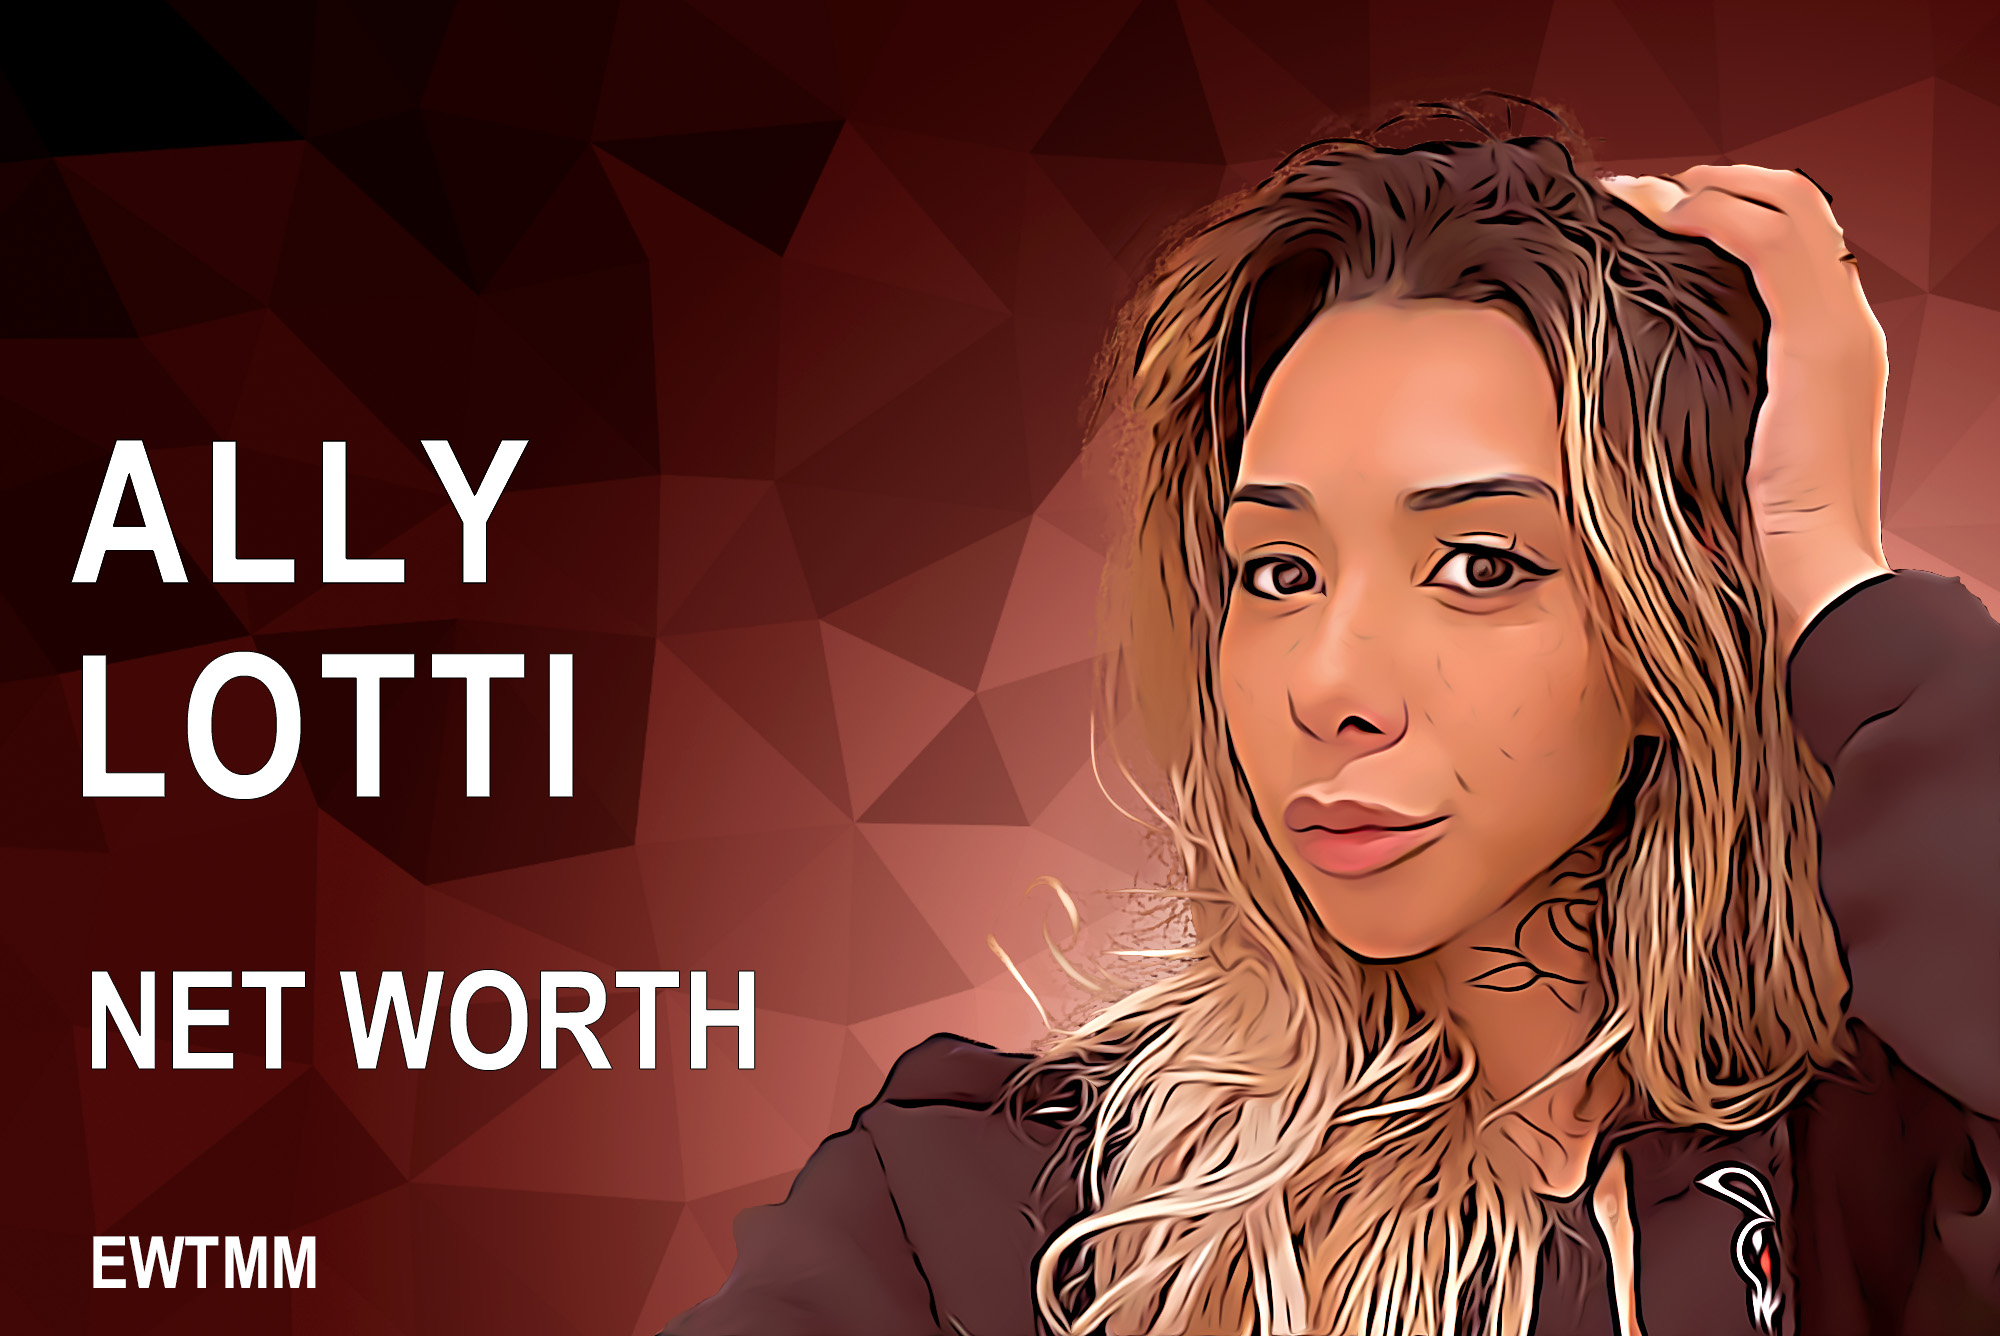 Ally Lotti net worth